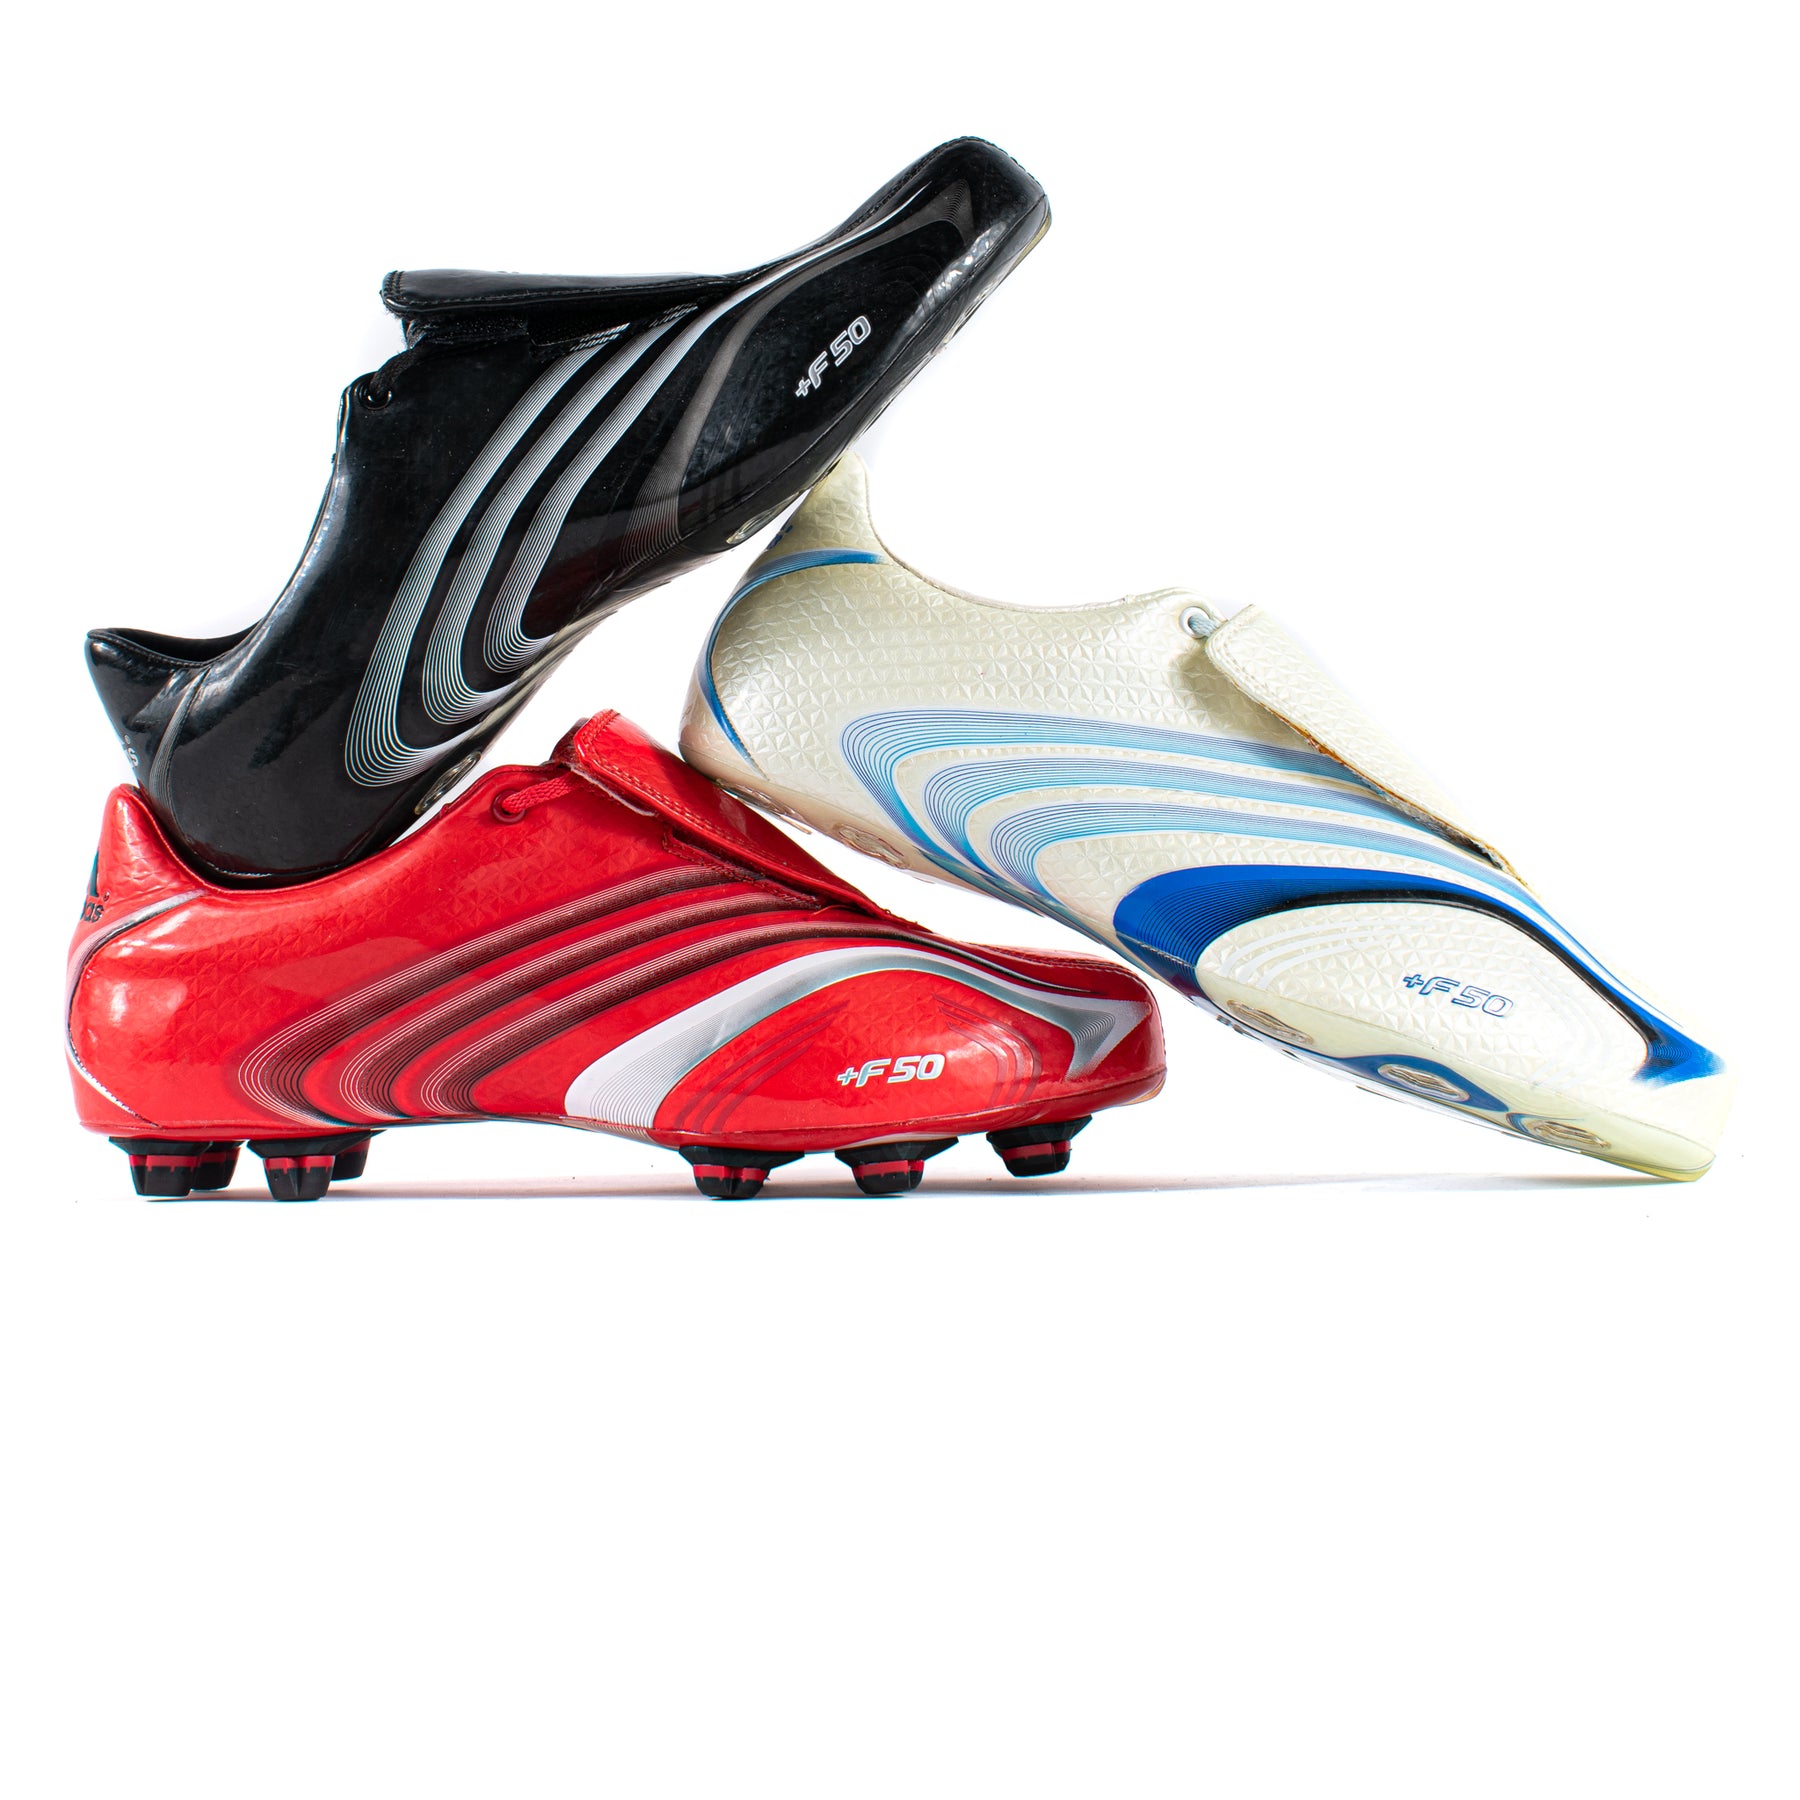 Adidas 3 RWB Pack – Classic Soccer Cleats